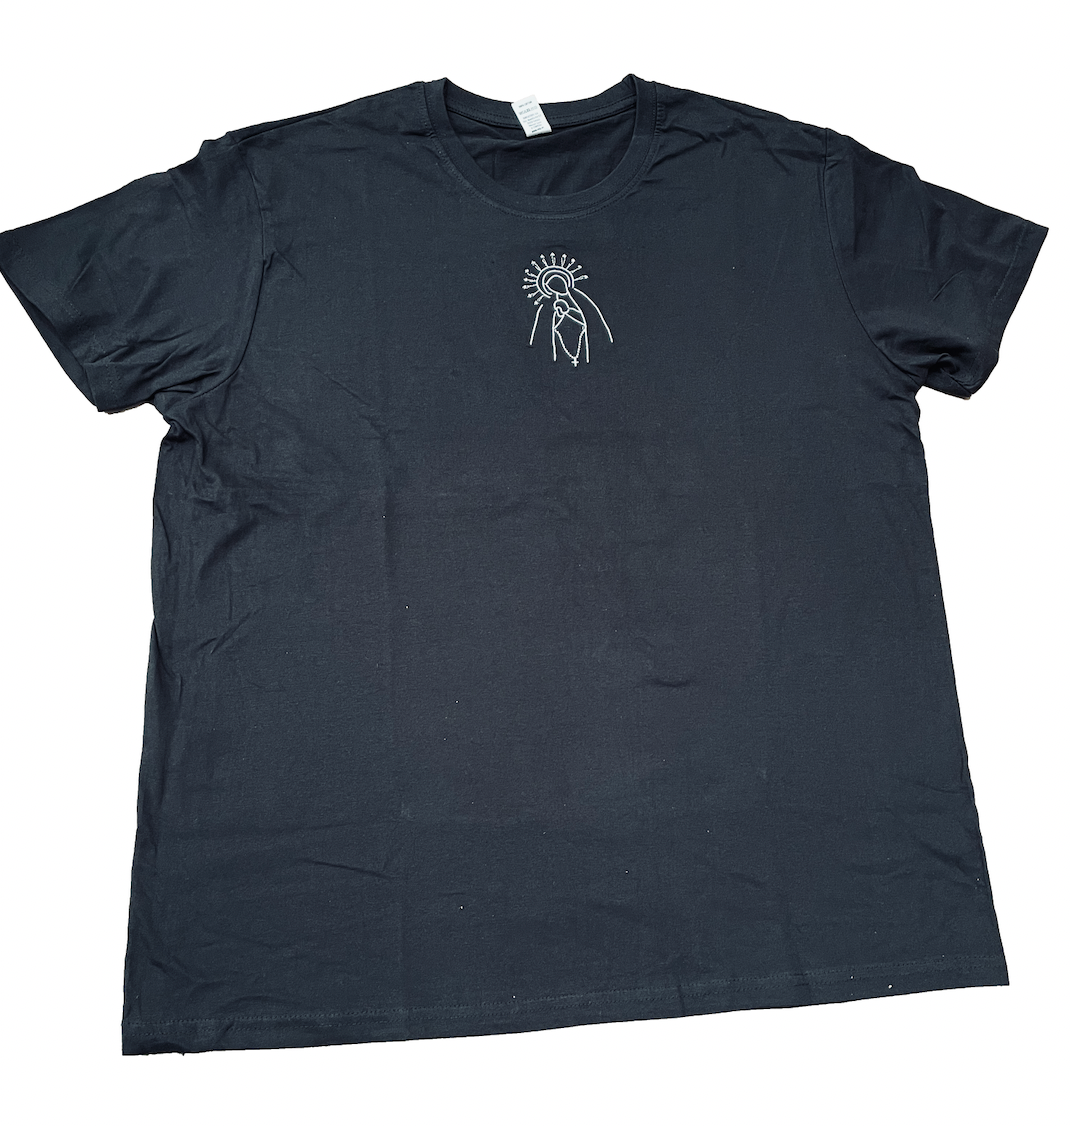 Camiseta unisex bordada negra La Paloma